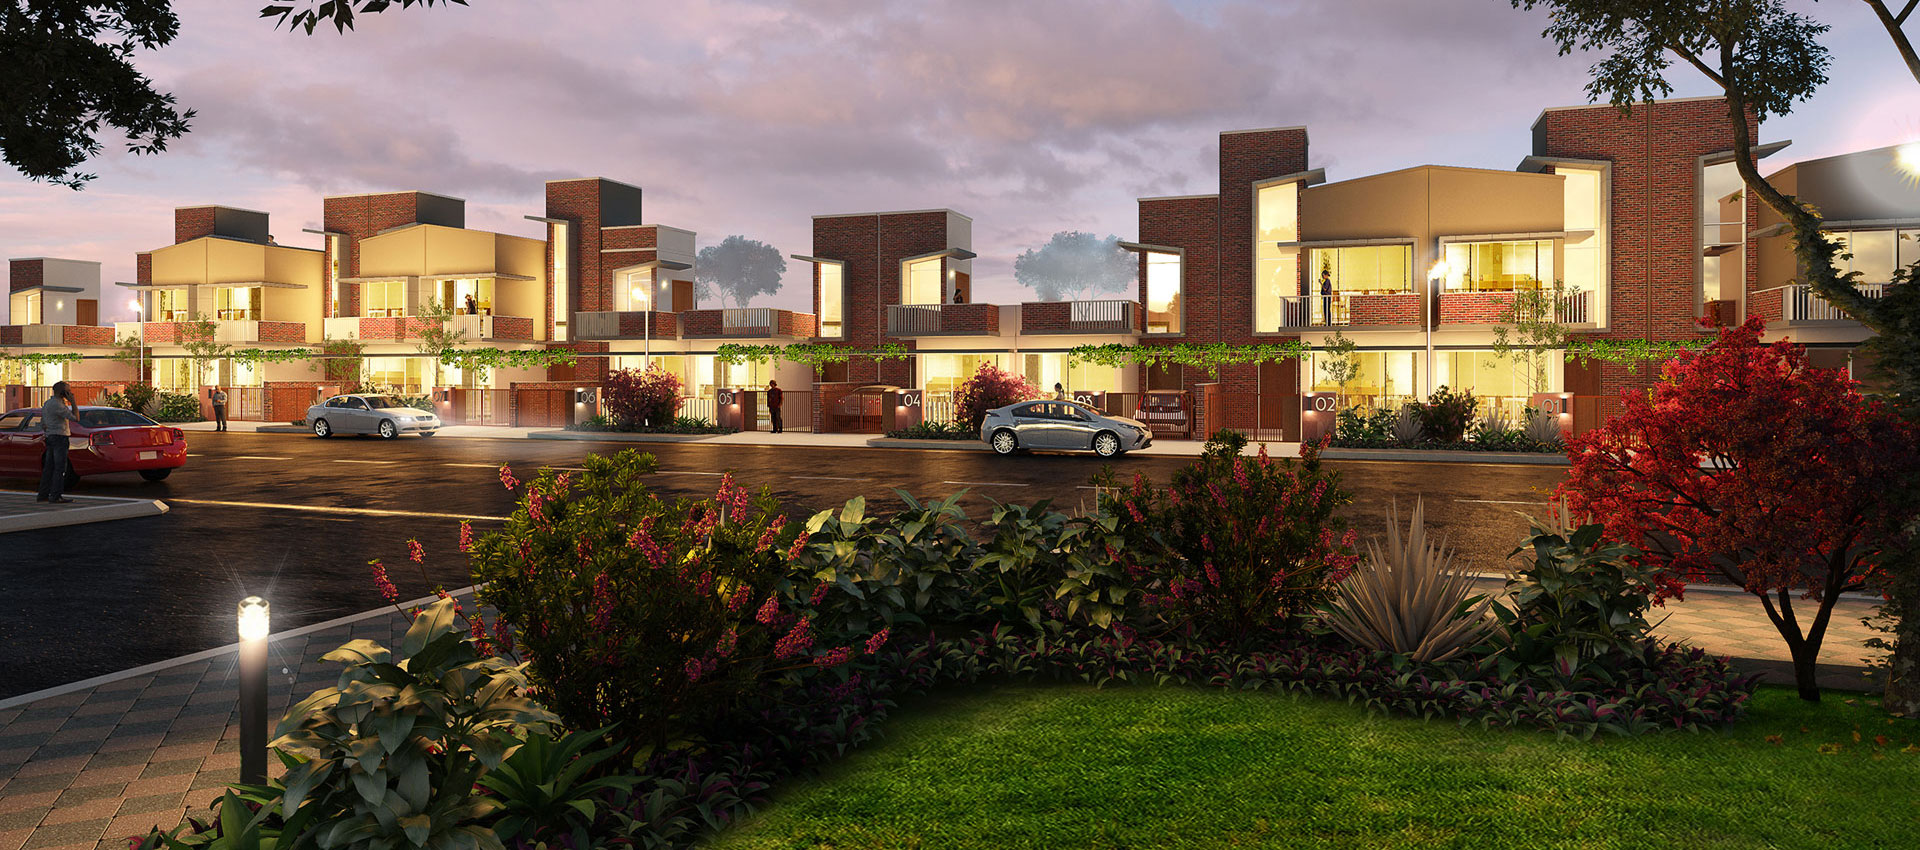 Buy Prime Residential Plots and Luxury Villas in Panchkula